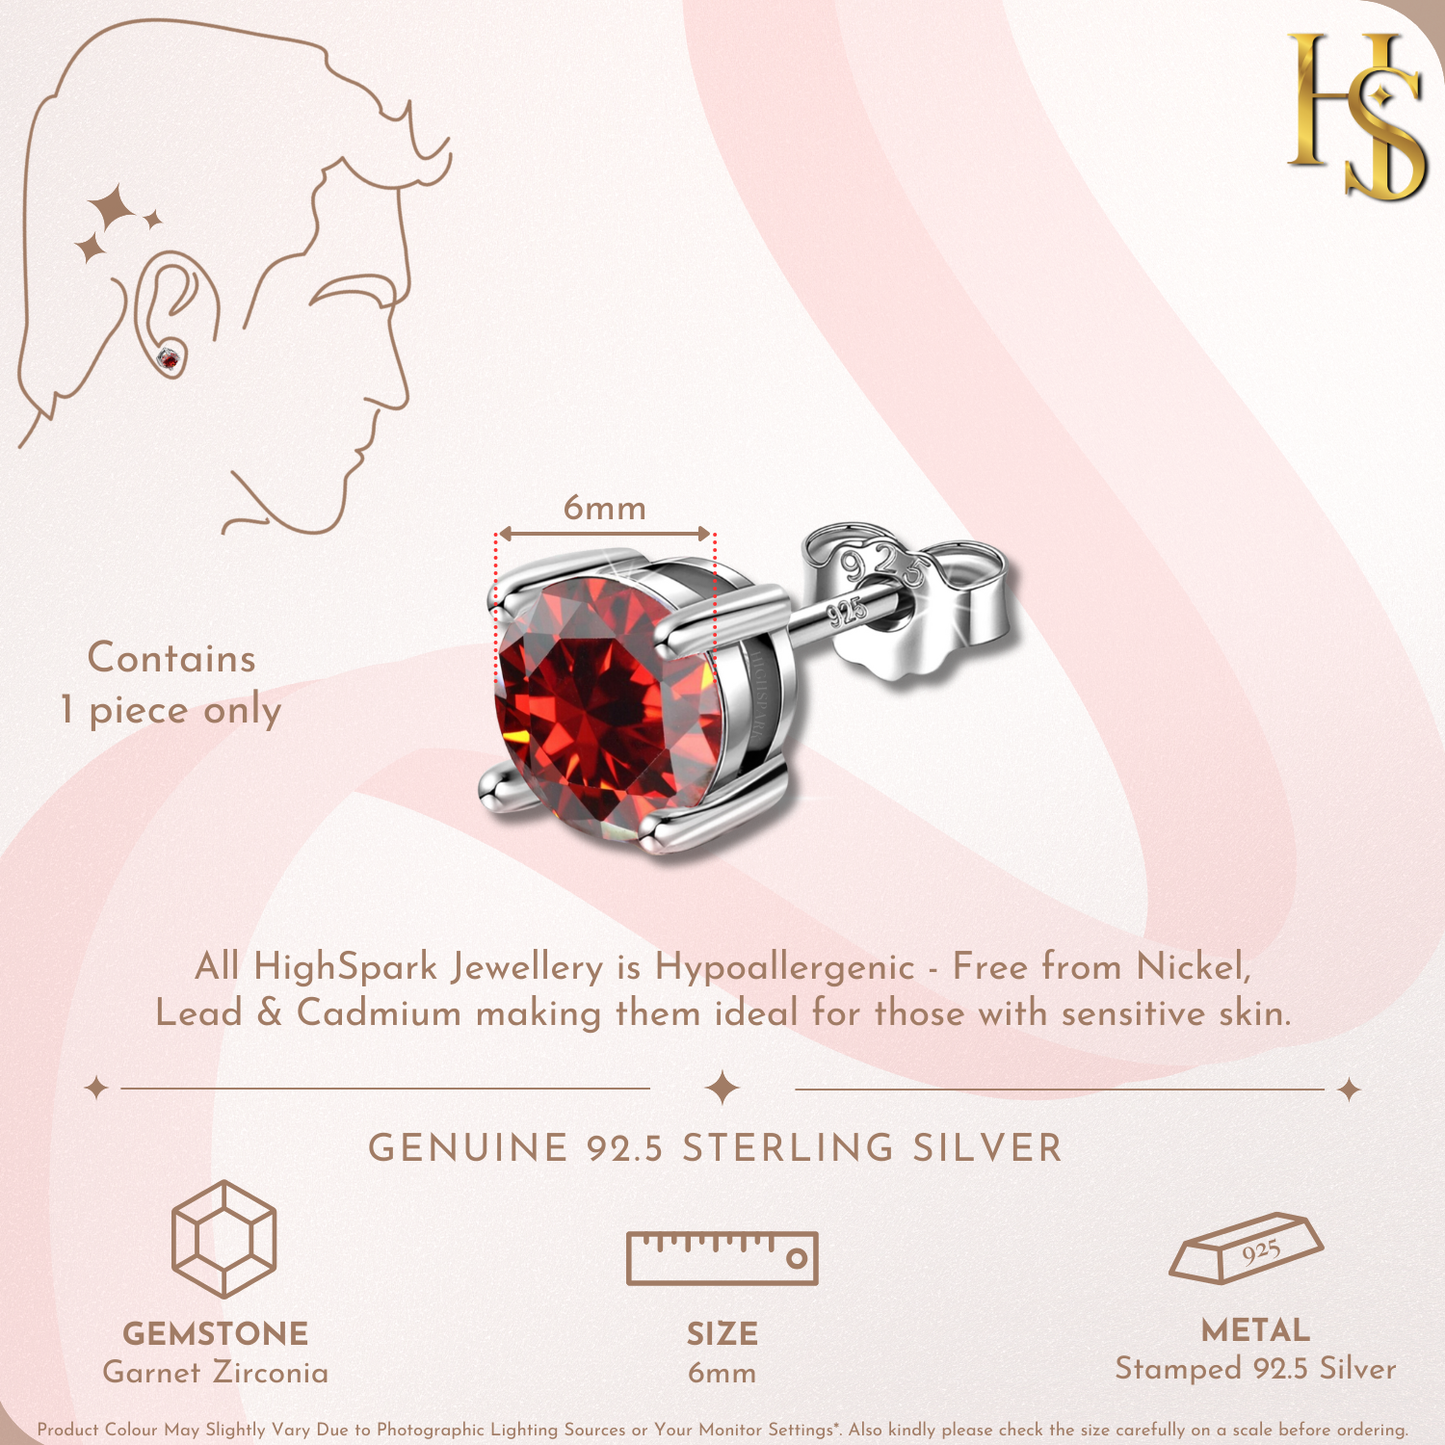 Men's Solitaire Stud Earring - 925 Silver - Birthstone January Garnet Zirconia - 1 Piece